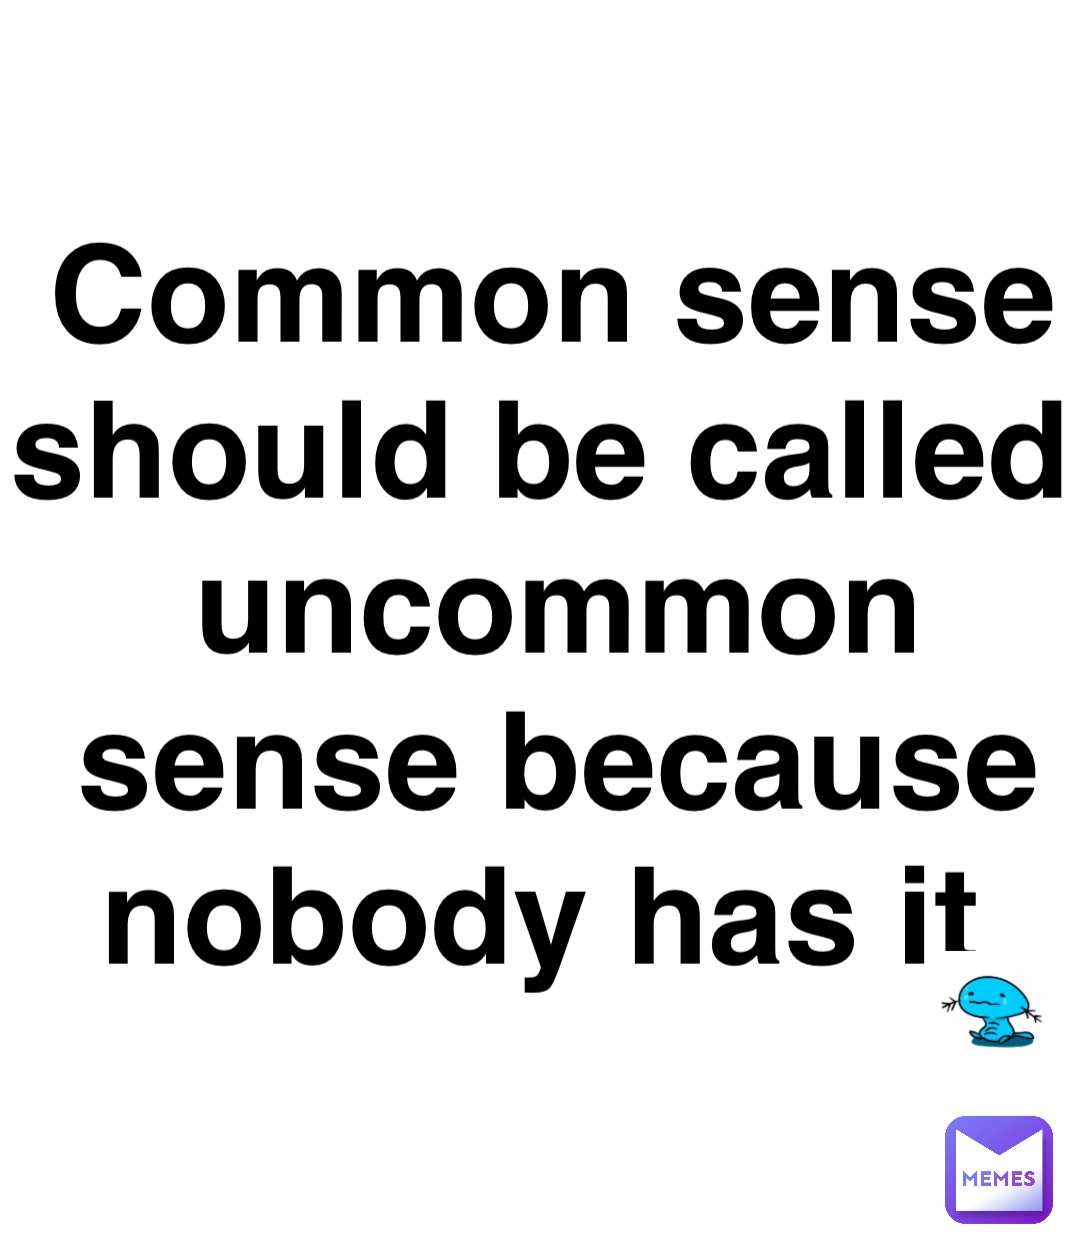 Common sense should be called uncommon sense because nobody has it